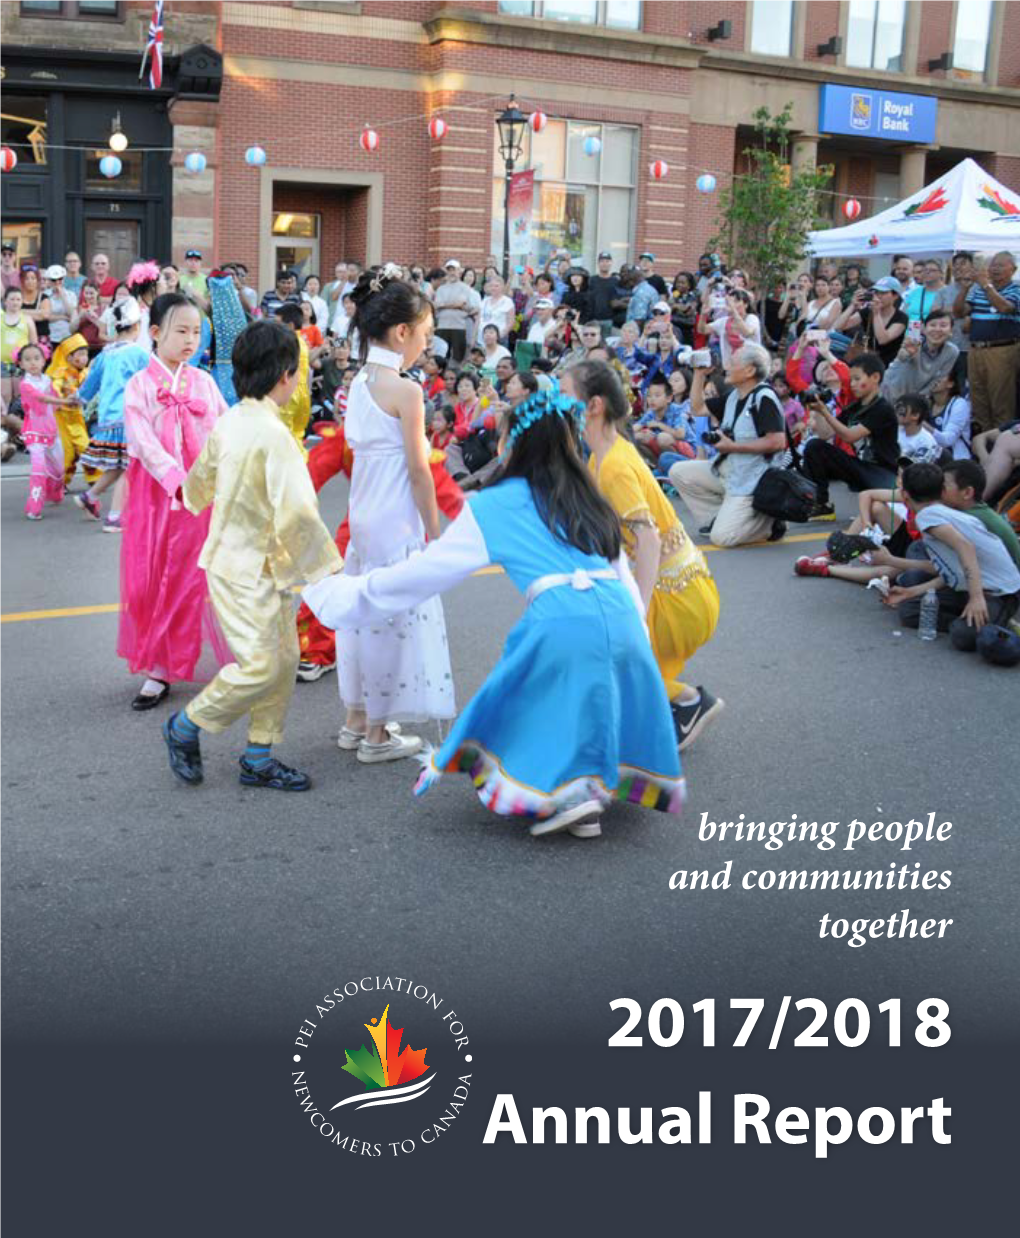 PEIANC 2017/2018 Annual Report